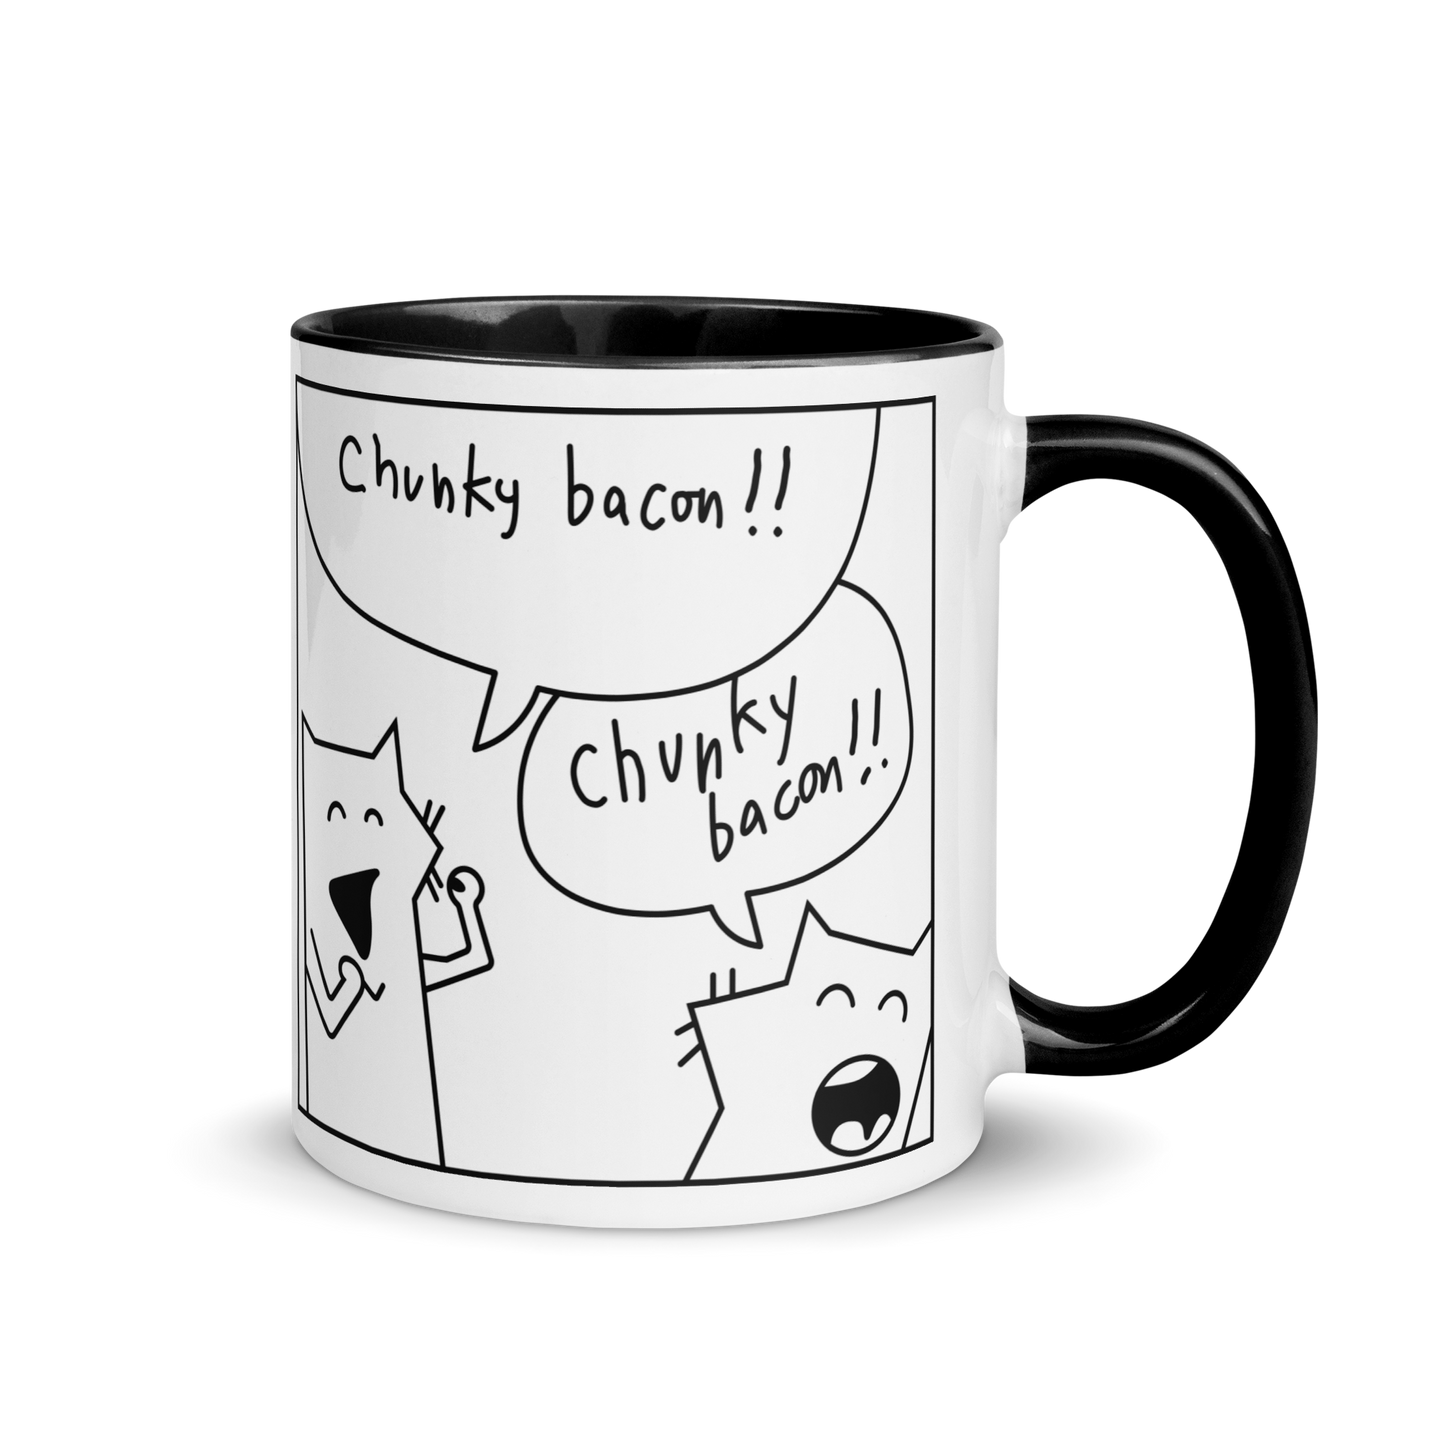 Chunky Bacon! Coffee Mug